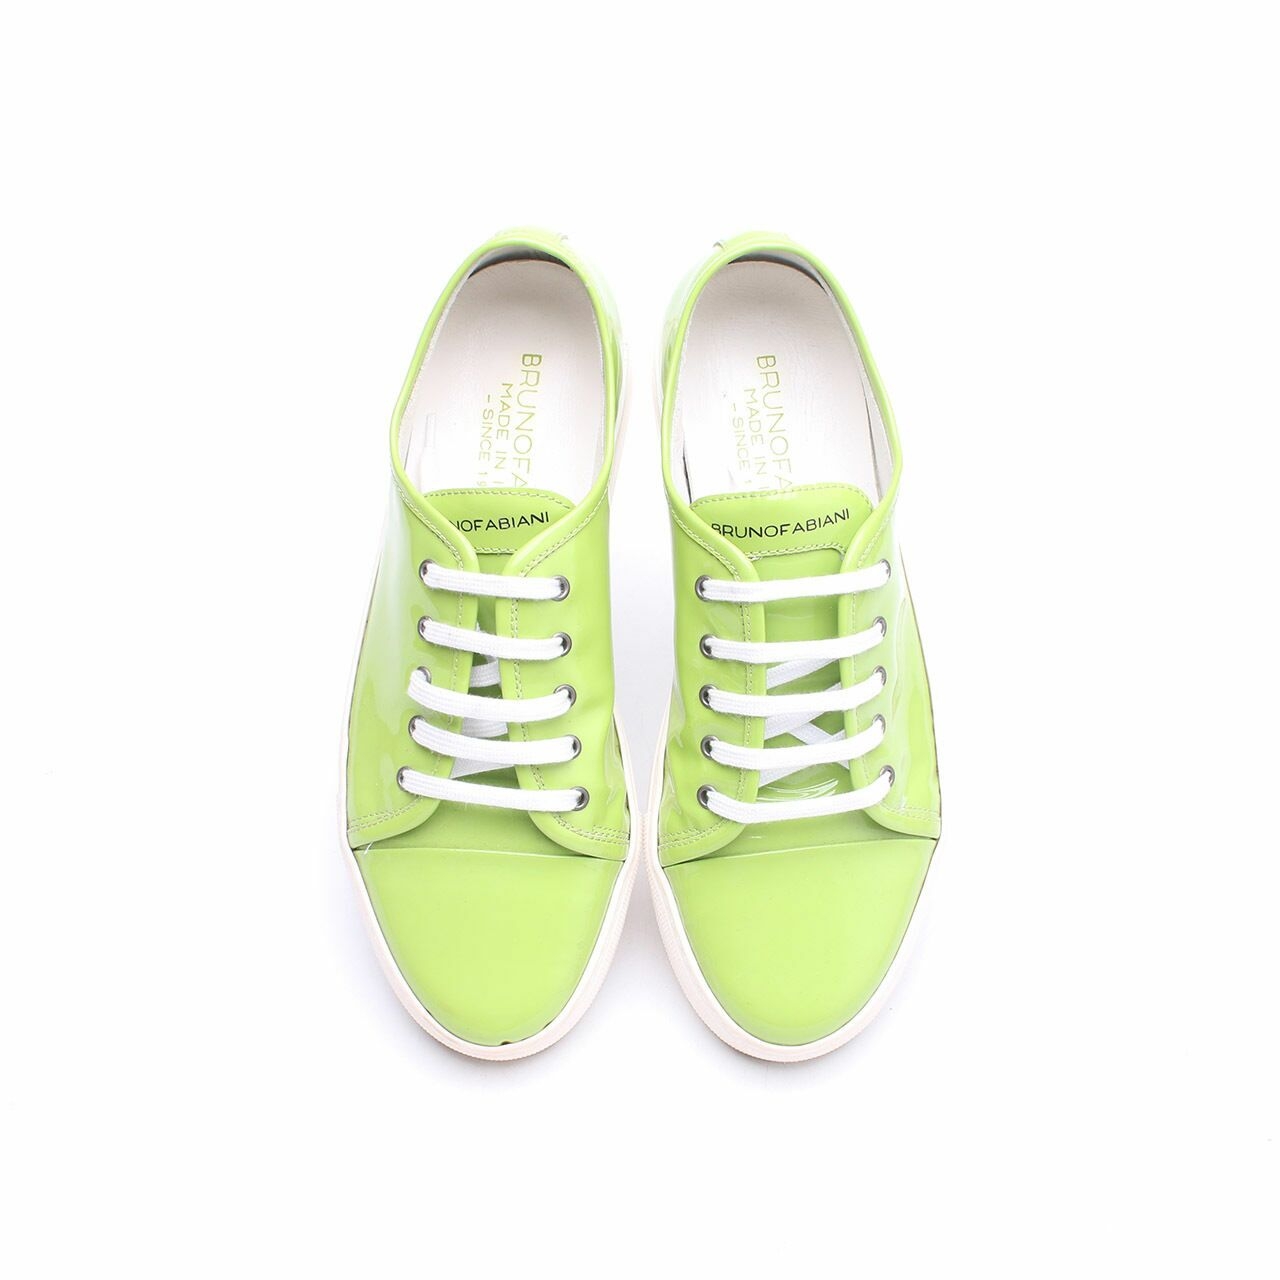 Bruno Fabiani Green Patent Leather Sneakers